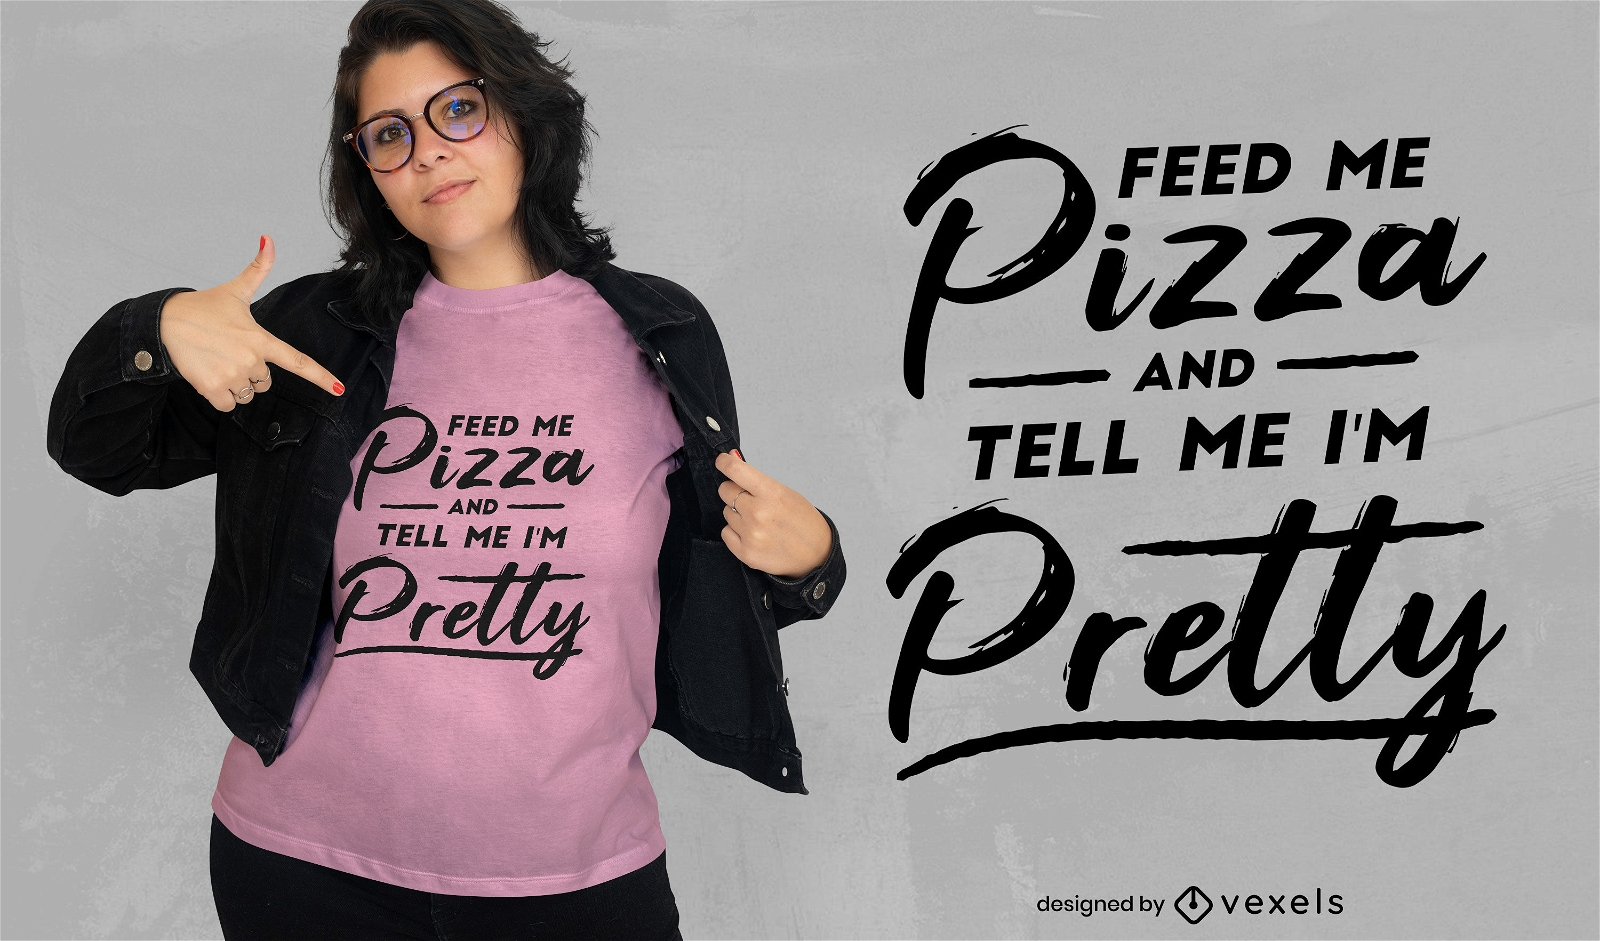 Alimente-me pizza design de camisetas engra?adas